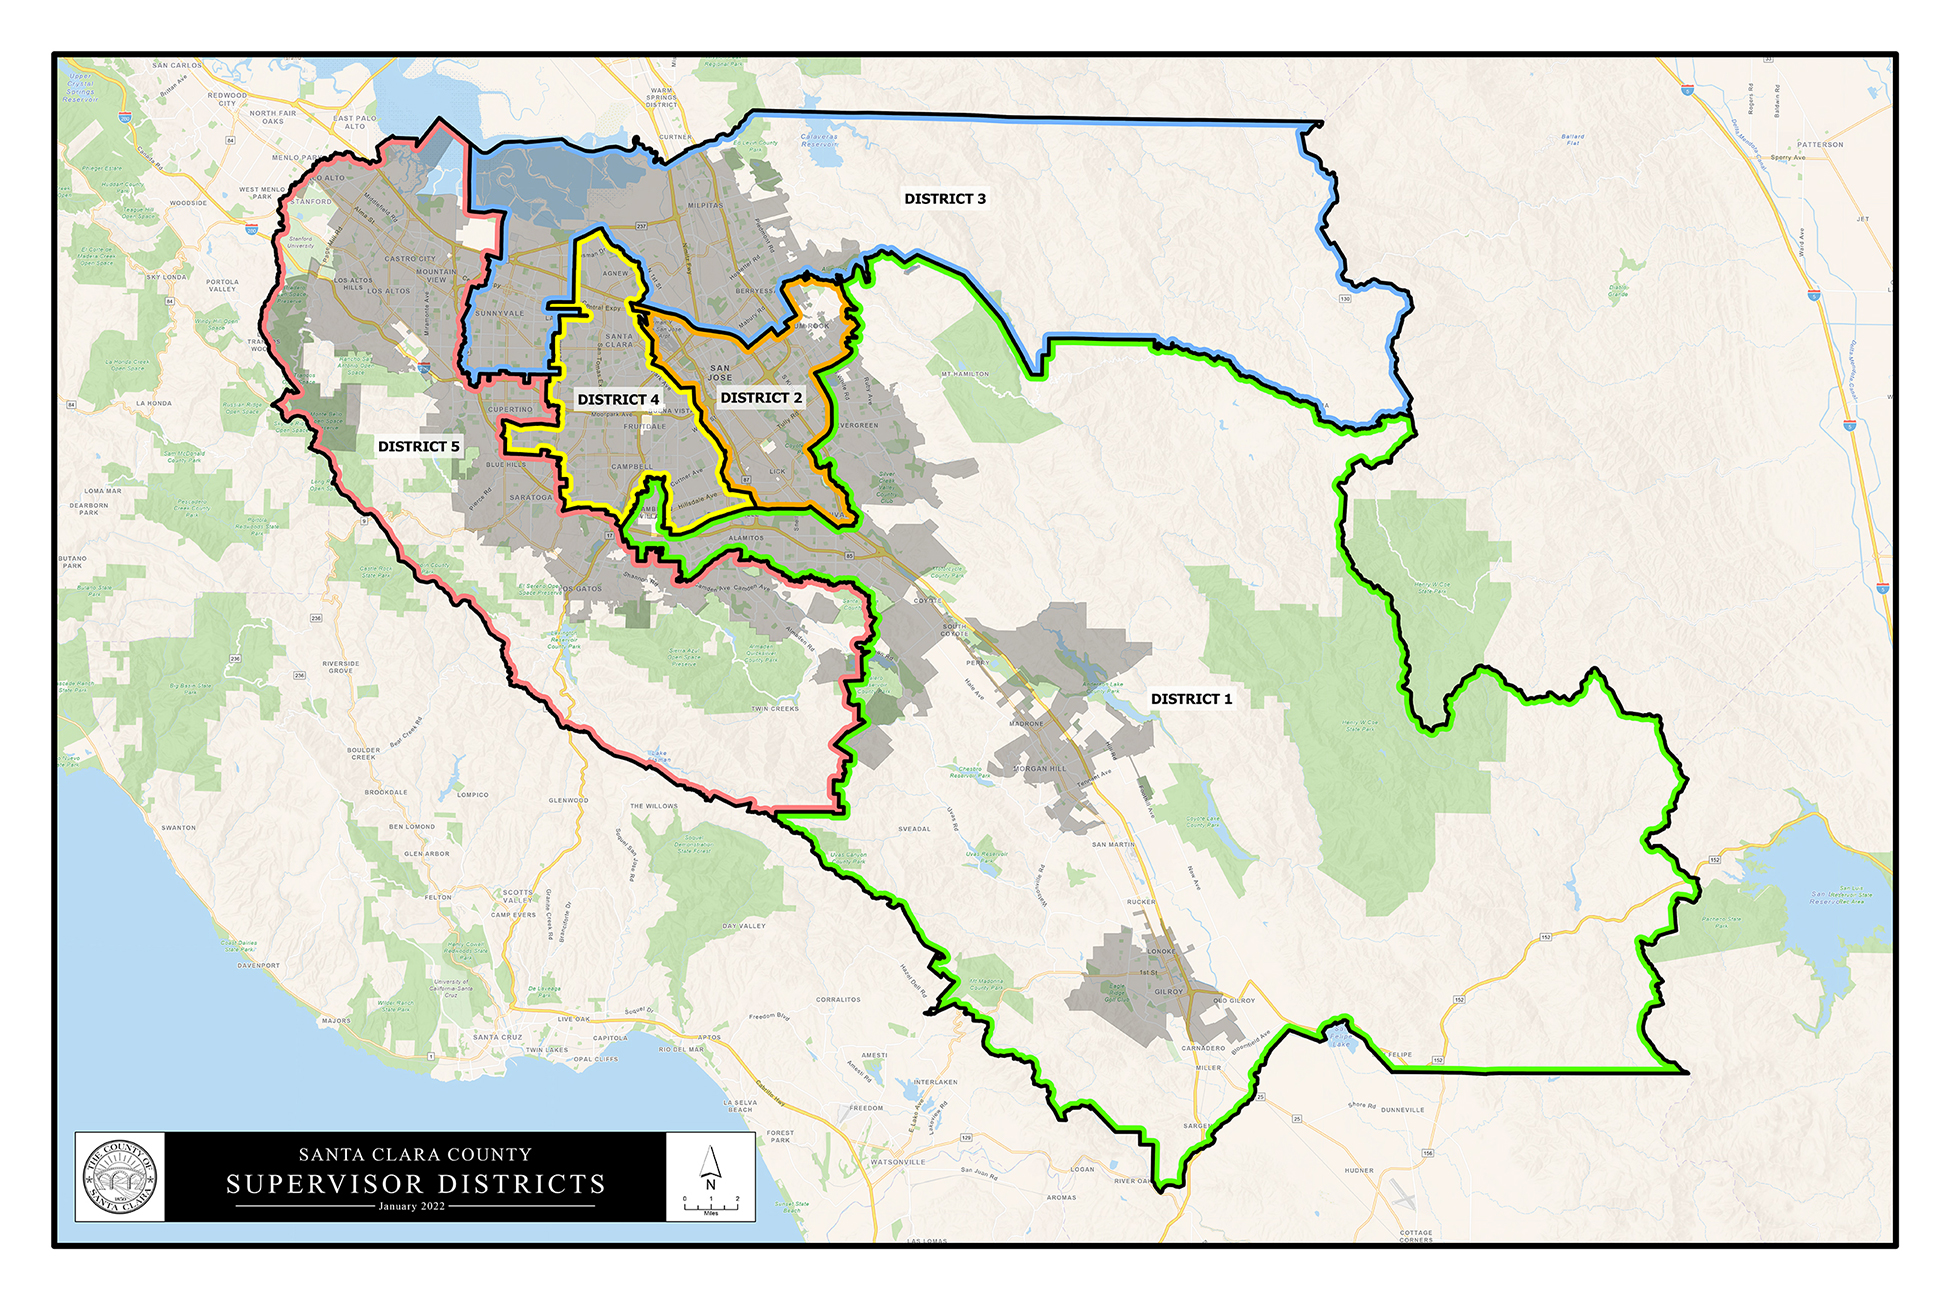 Santa Clara County Supervisorial Districts